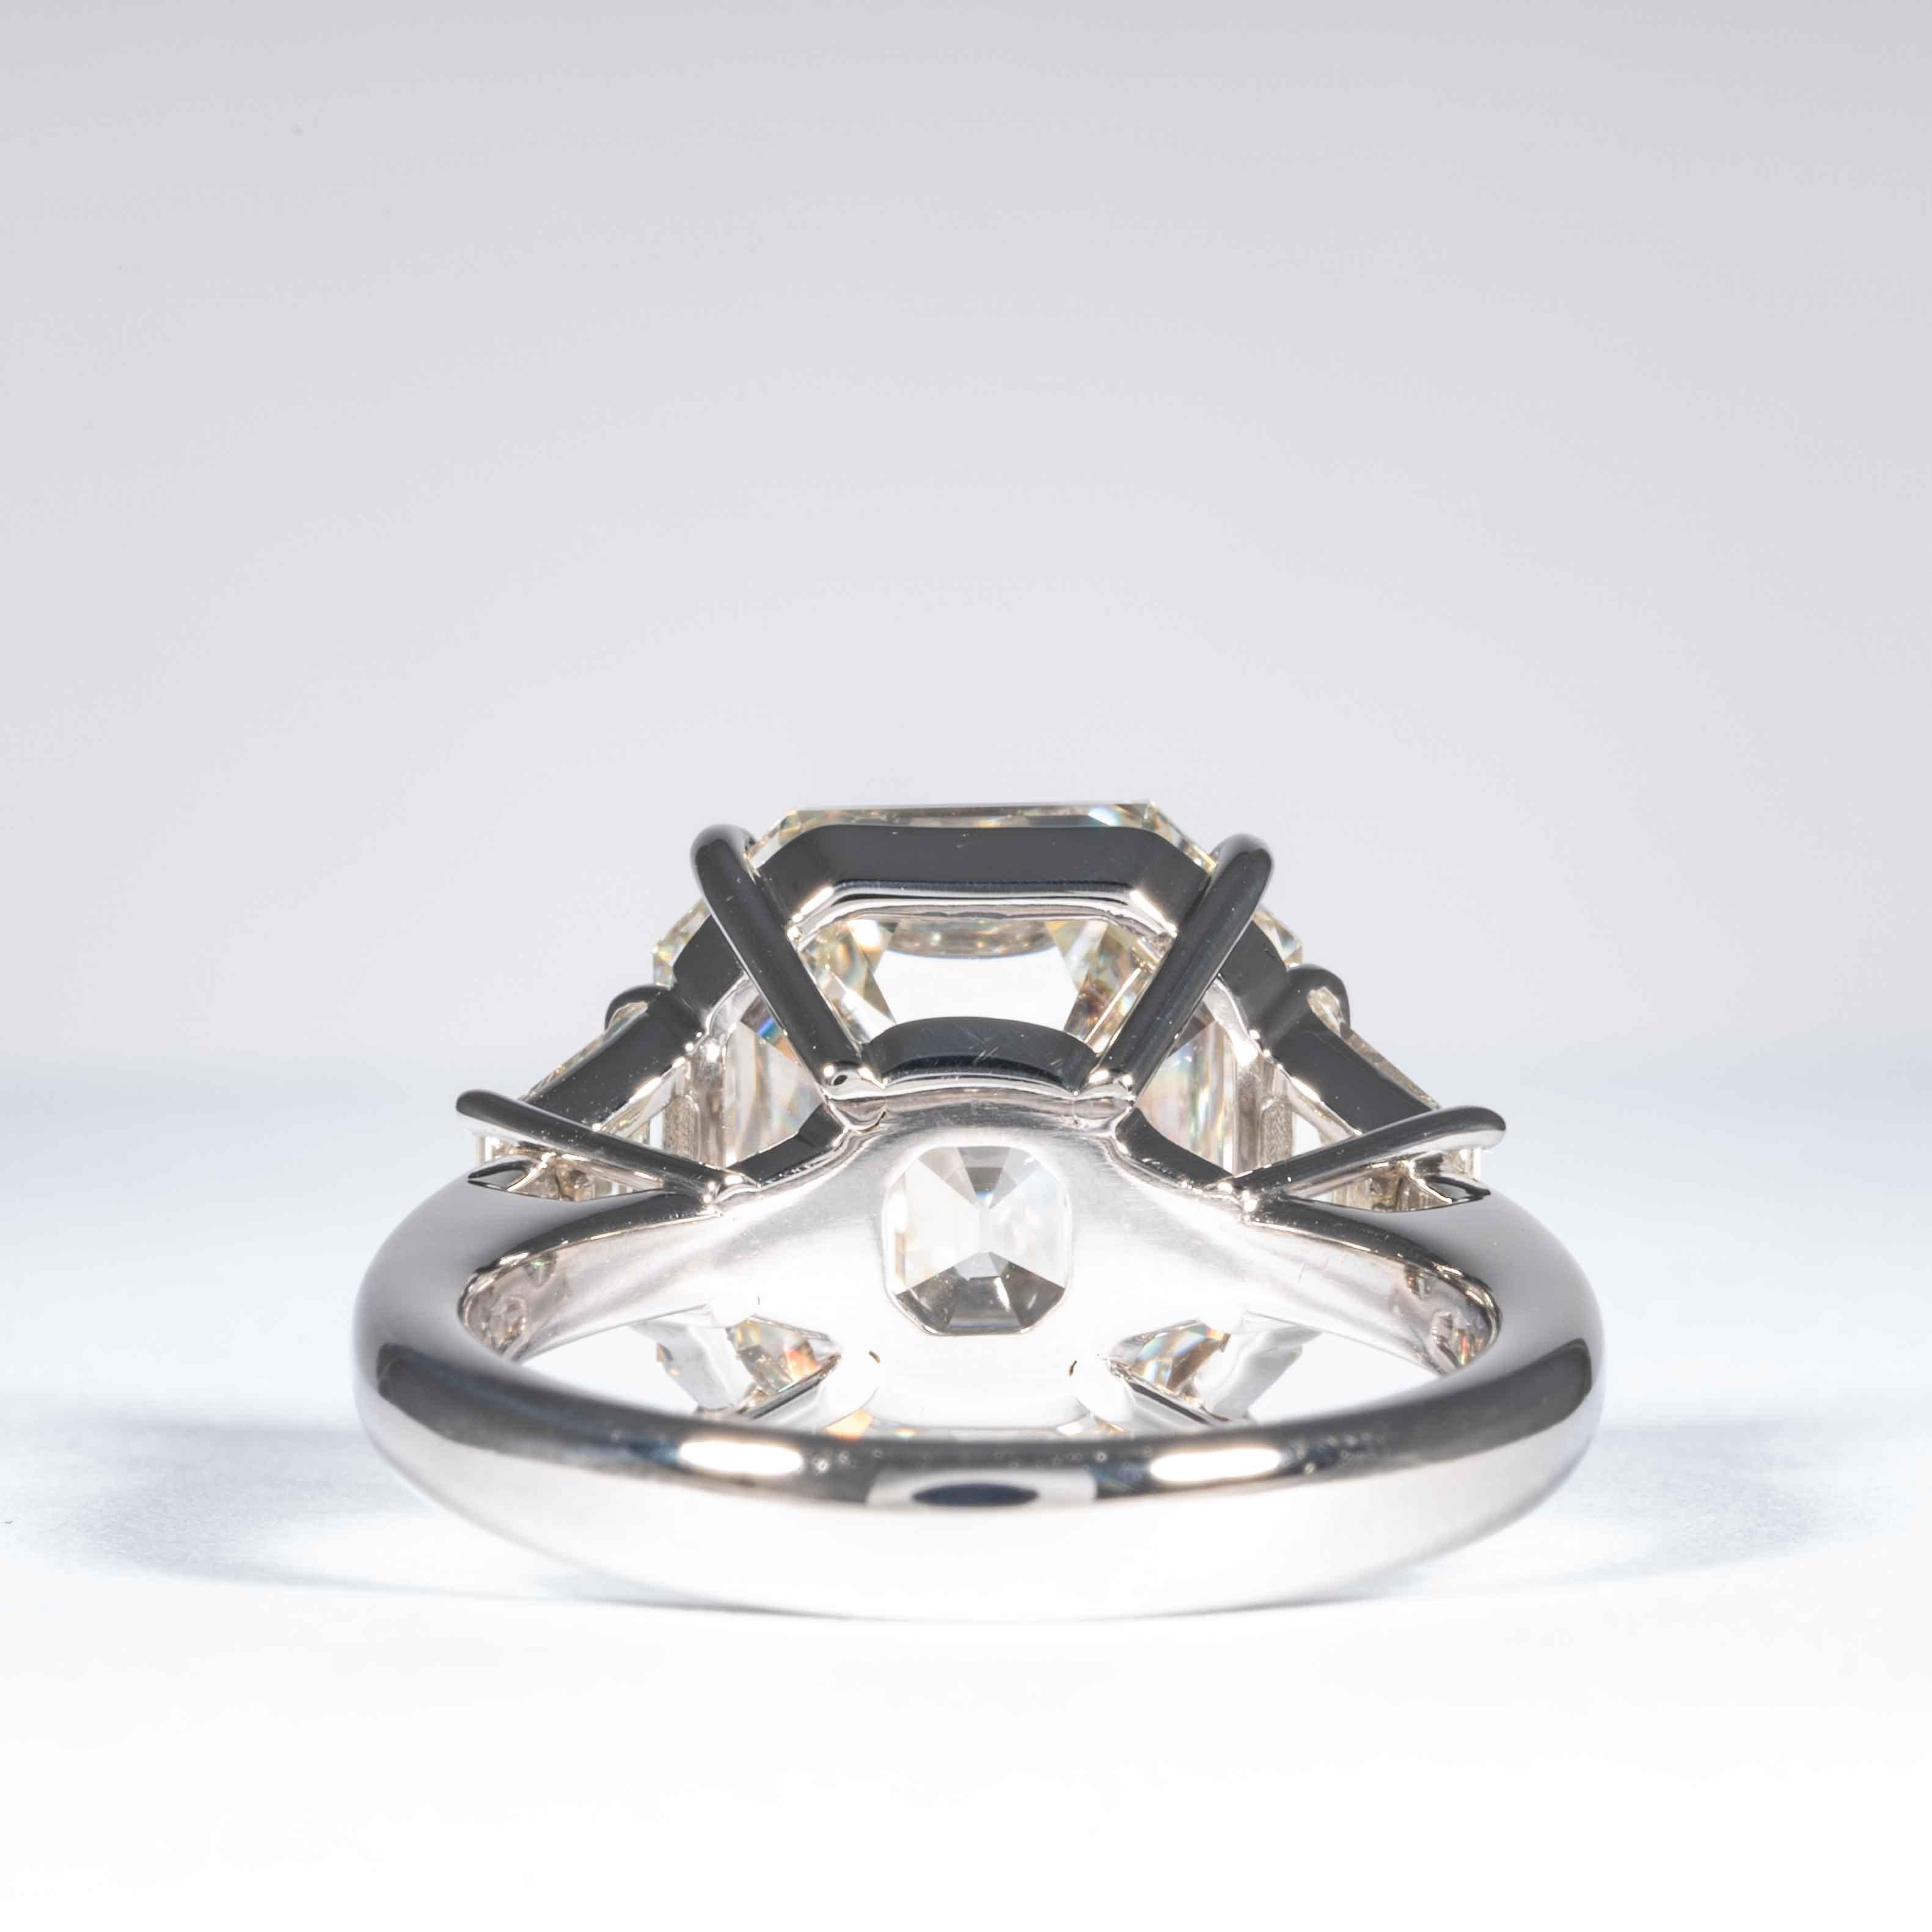 Shreve, Crump & Low GIA Certified 10.04 Carat L VS1 Asscher Cut Diamond Ring 1